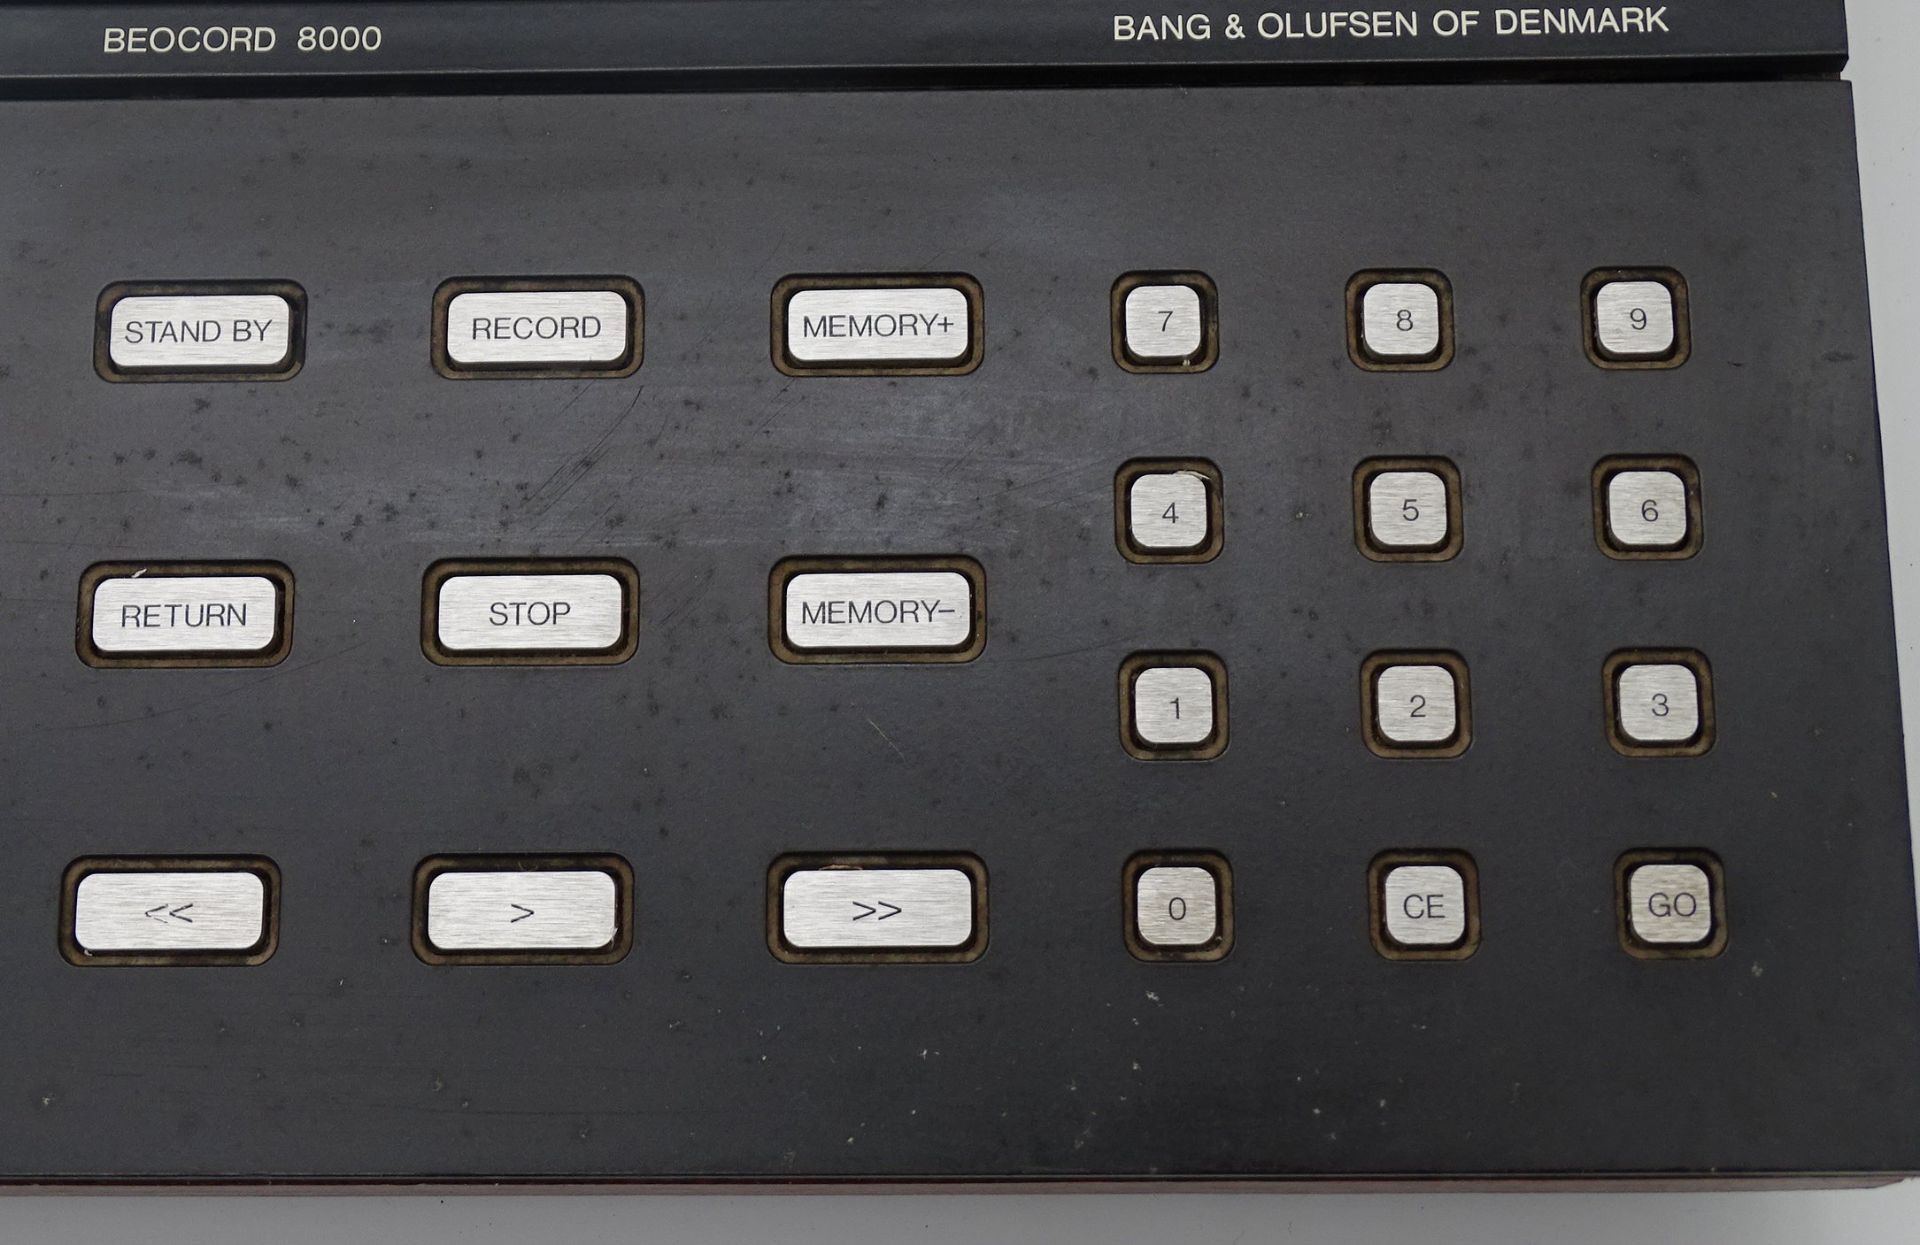 Bang & Olufsen of Denmark, Beocord 8000, Funkion nicht überprüft, 52 x 28cm - Image 4 of 9